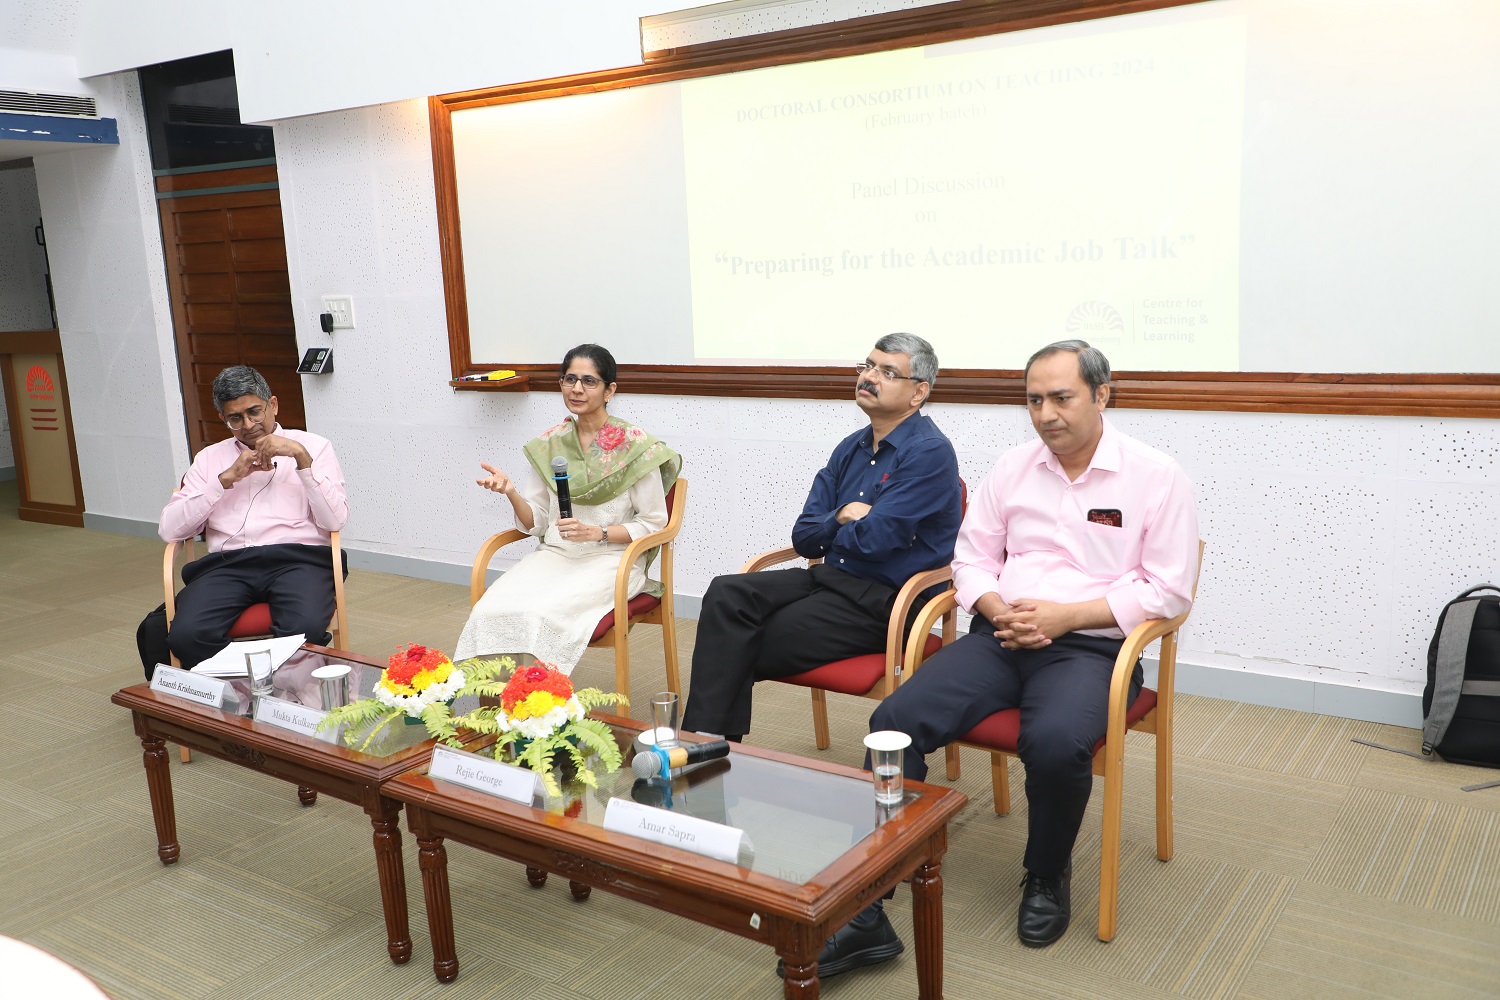 (From L to R): Prof. Ananth Krishnamurthy, Prof. Mukta Kulkarni, Prof. Rejie George, and Prof. Amar Sapra having a panel discussion on ‘Preparing for the Academic Job Talk’. 